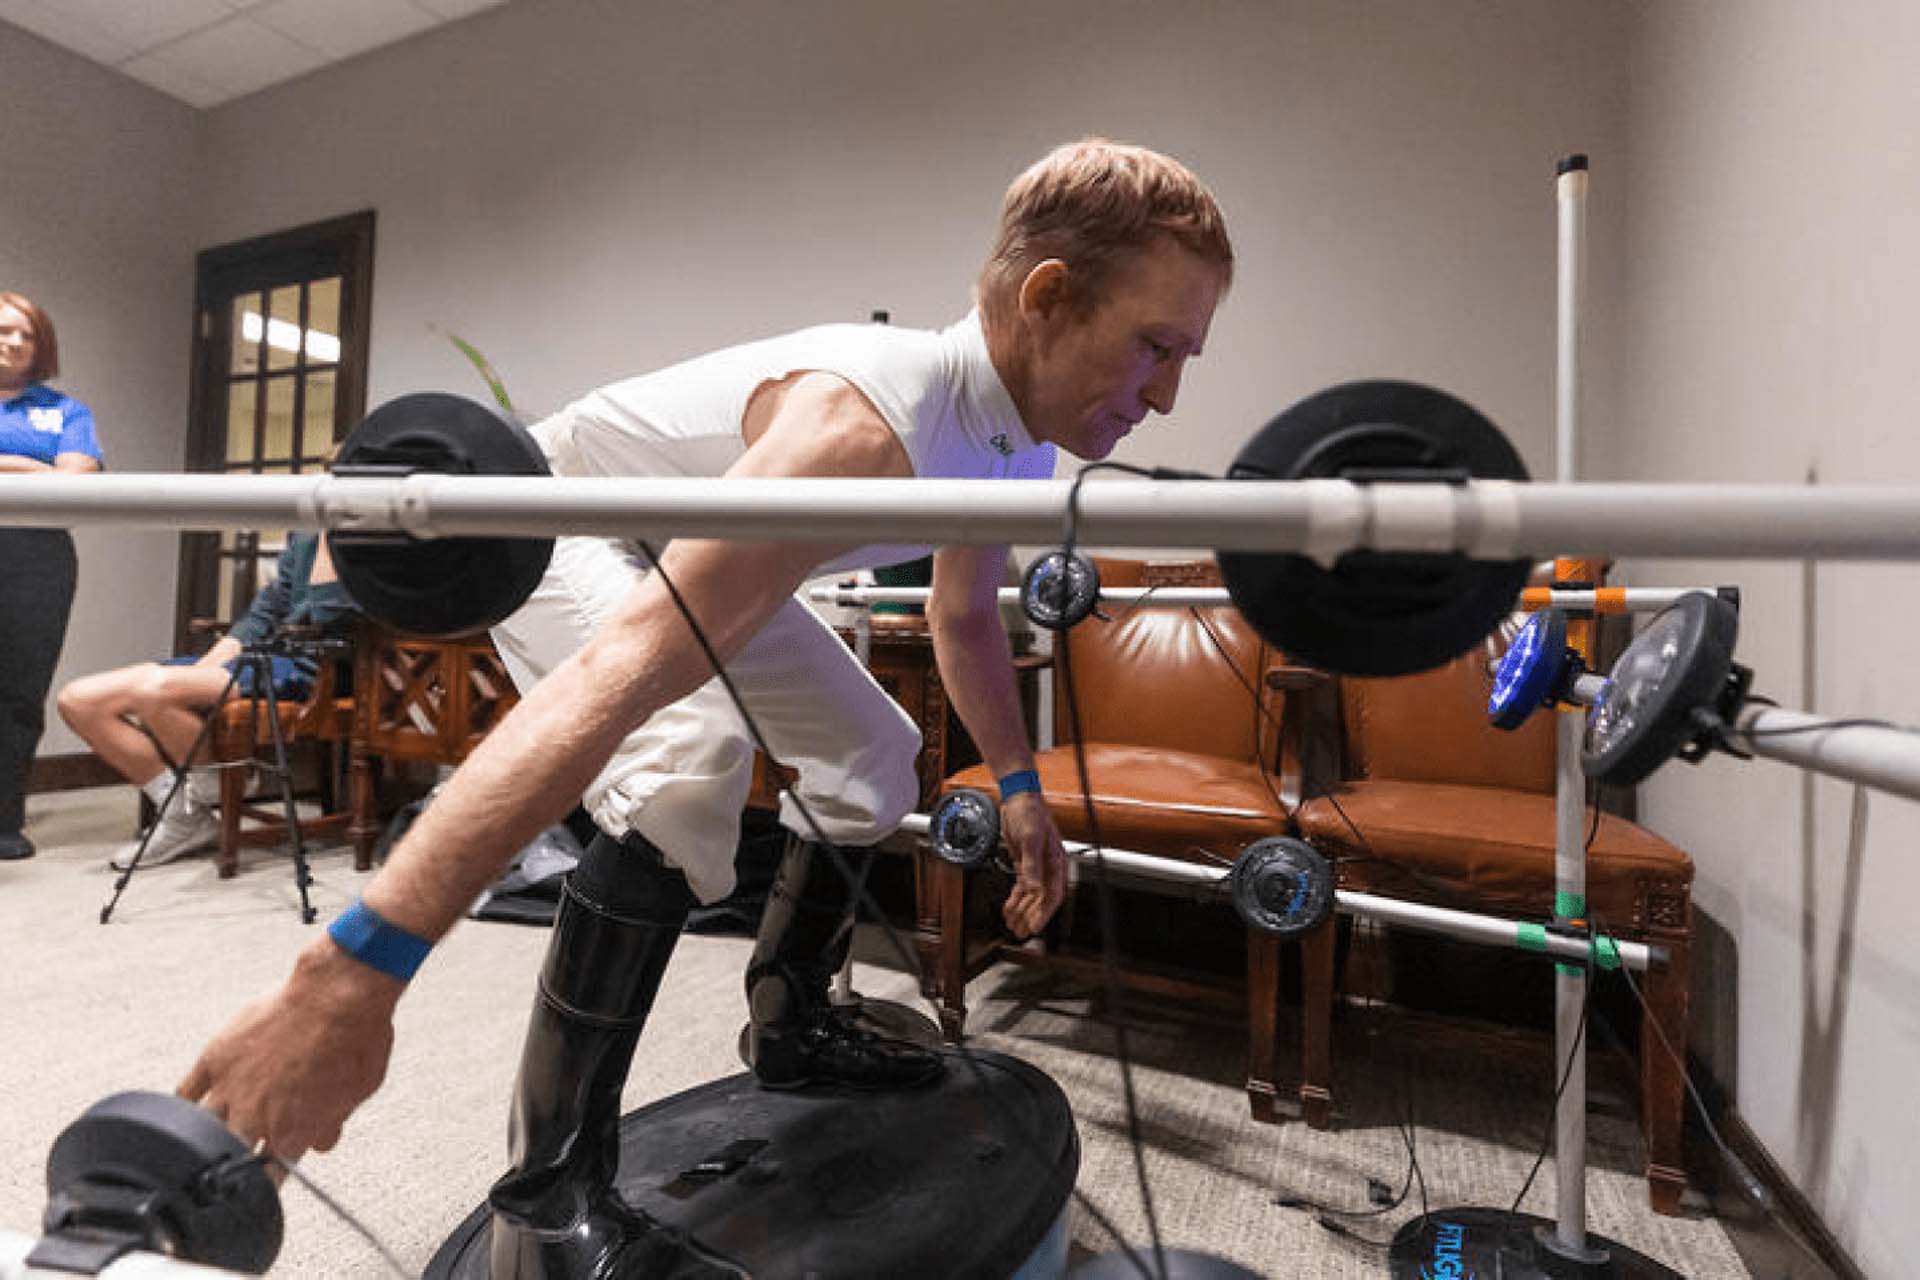 An action shot of a jockey crouching as he balances on a piece of training equipment.